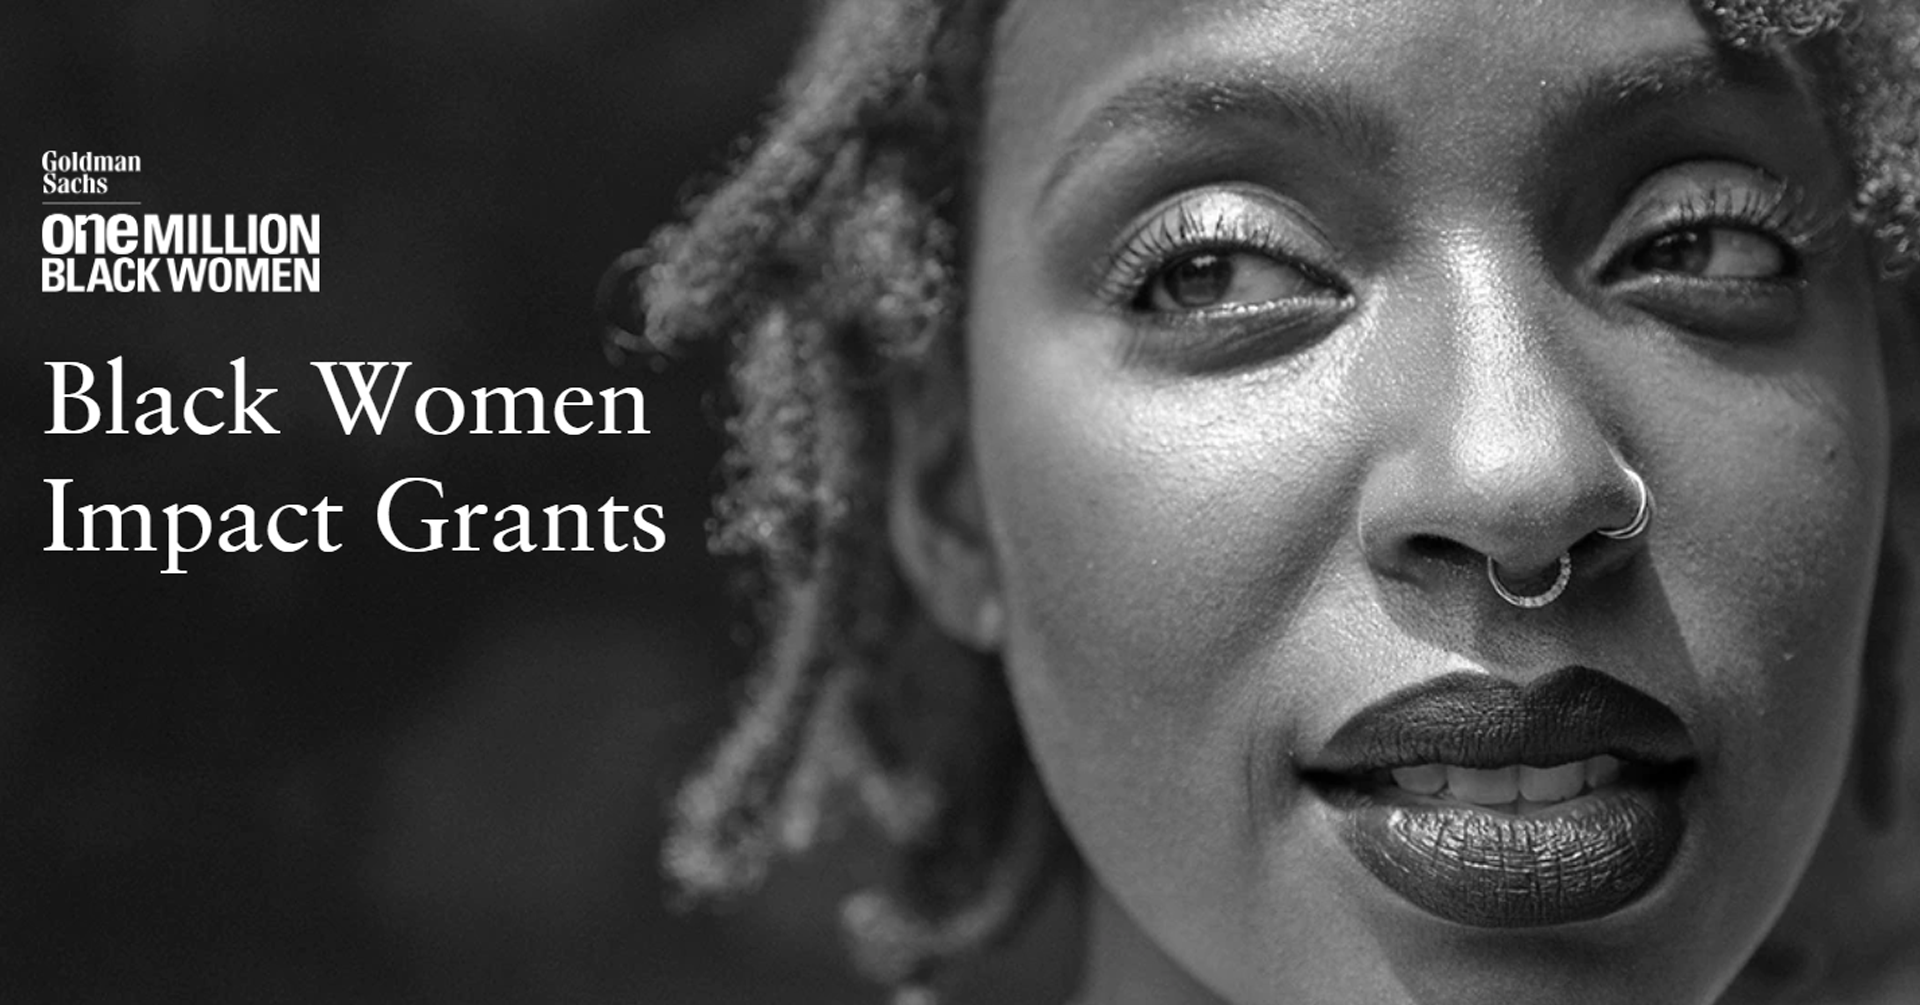 Goldman Sachs launches the Black Women Impact Grants. Photo credit: Goldman Sachs